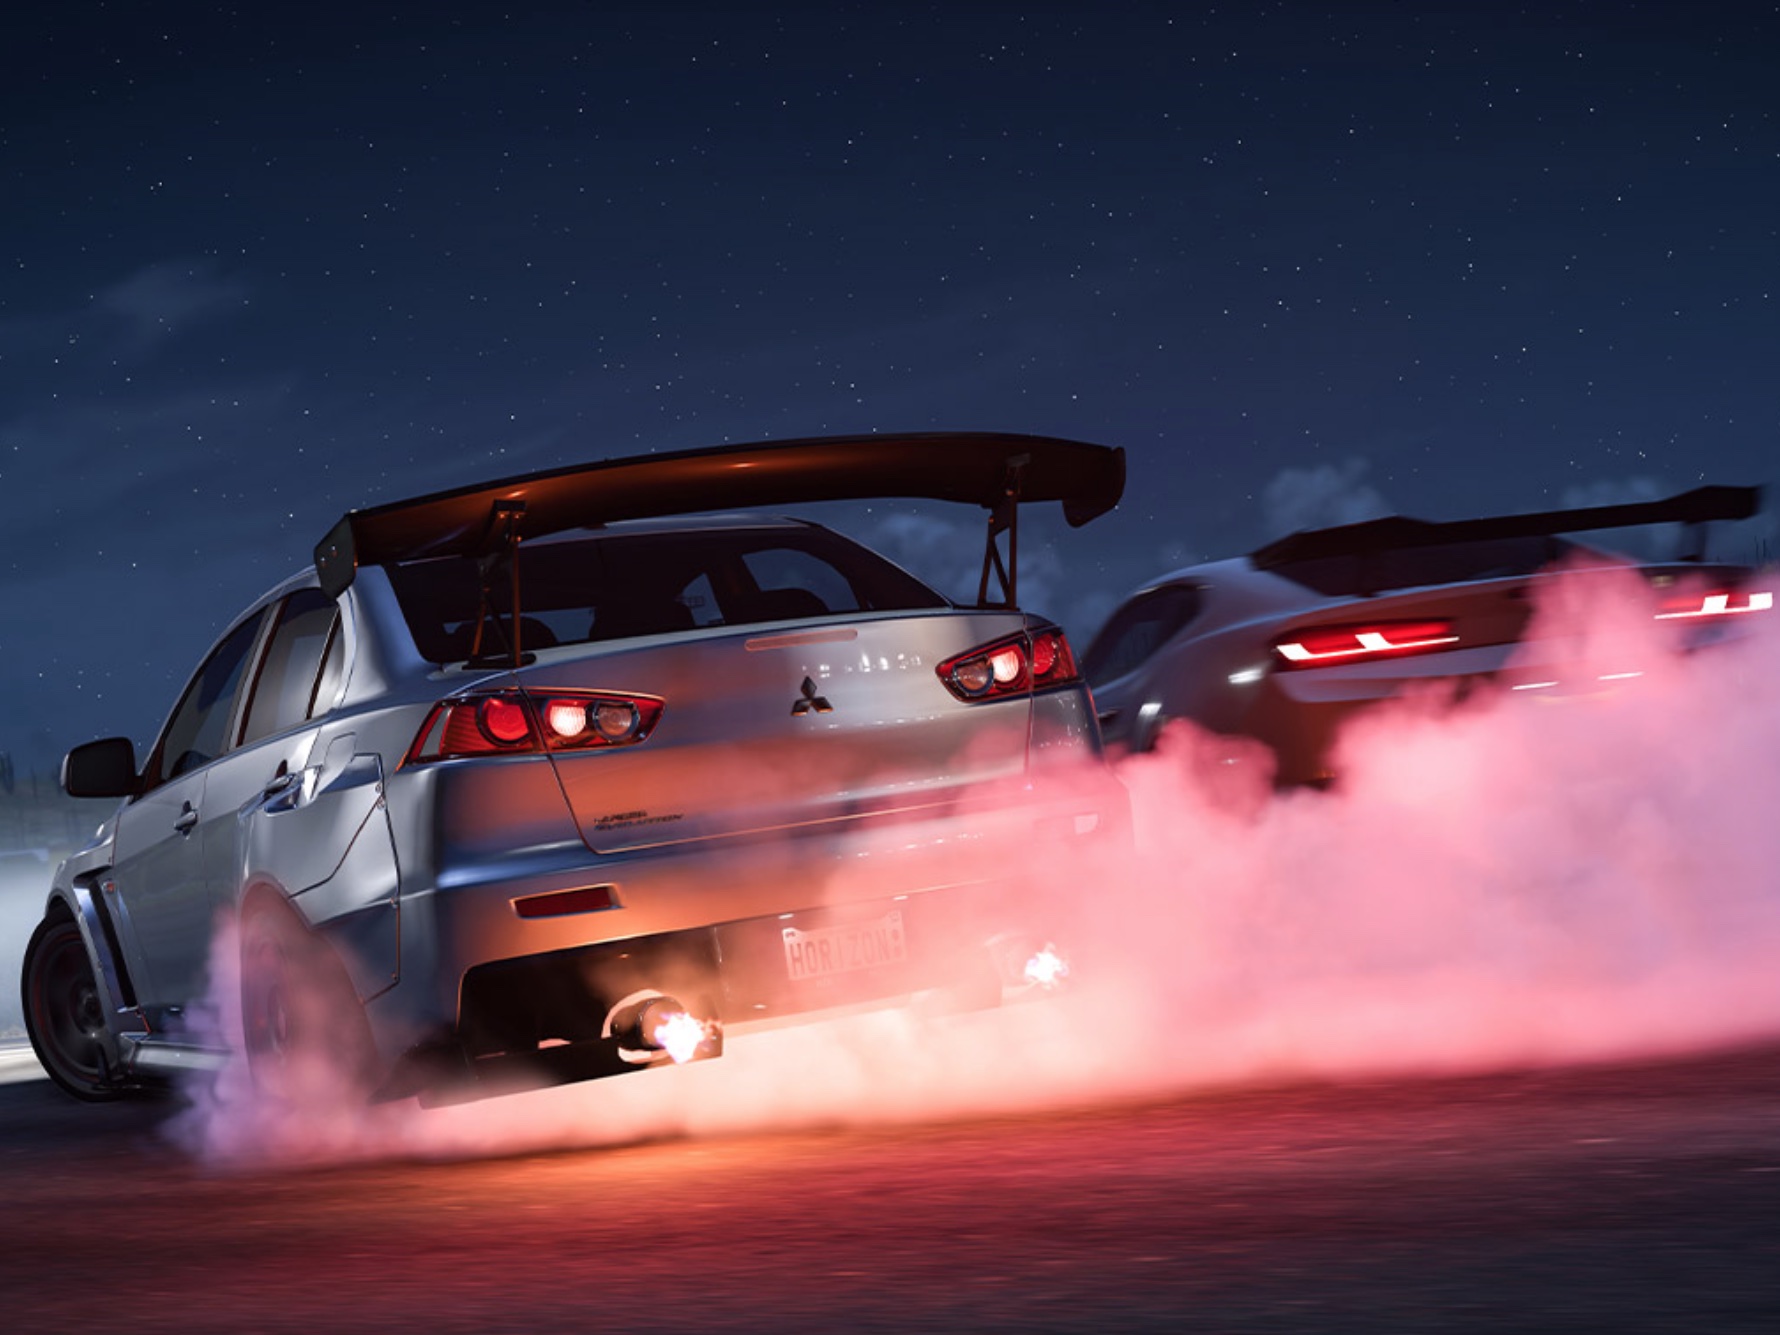 Forza Horizon 5: requisitos para rodar no PC